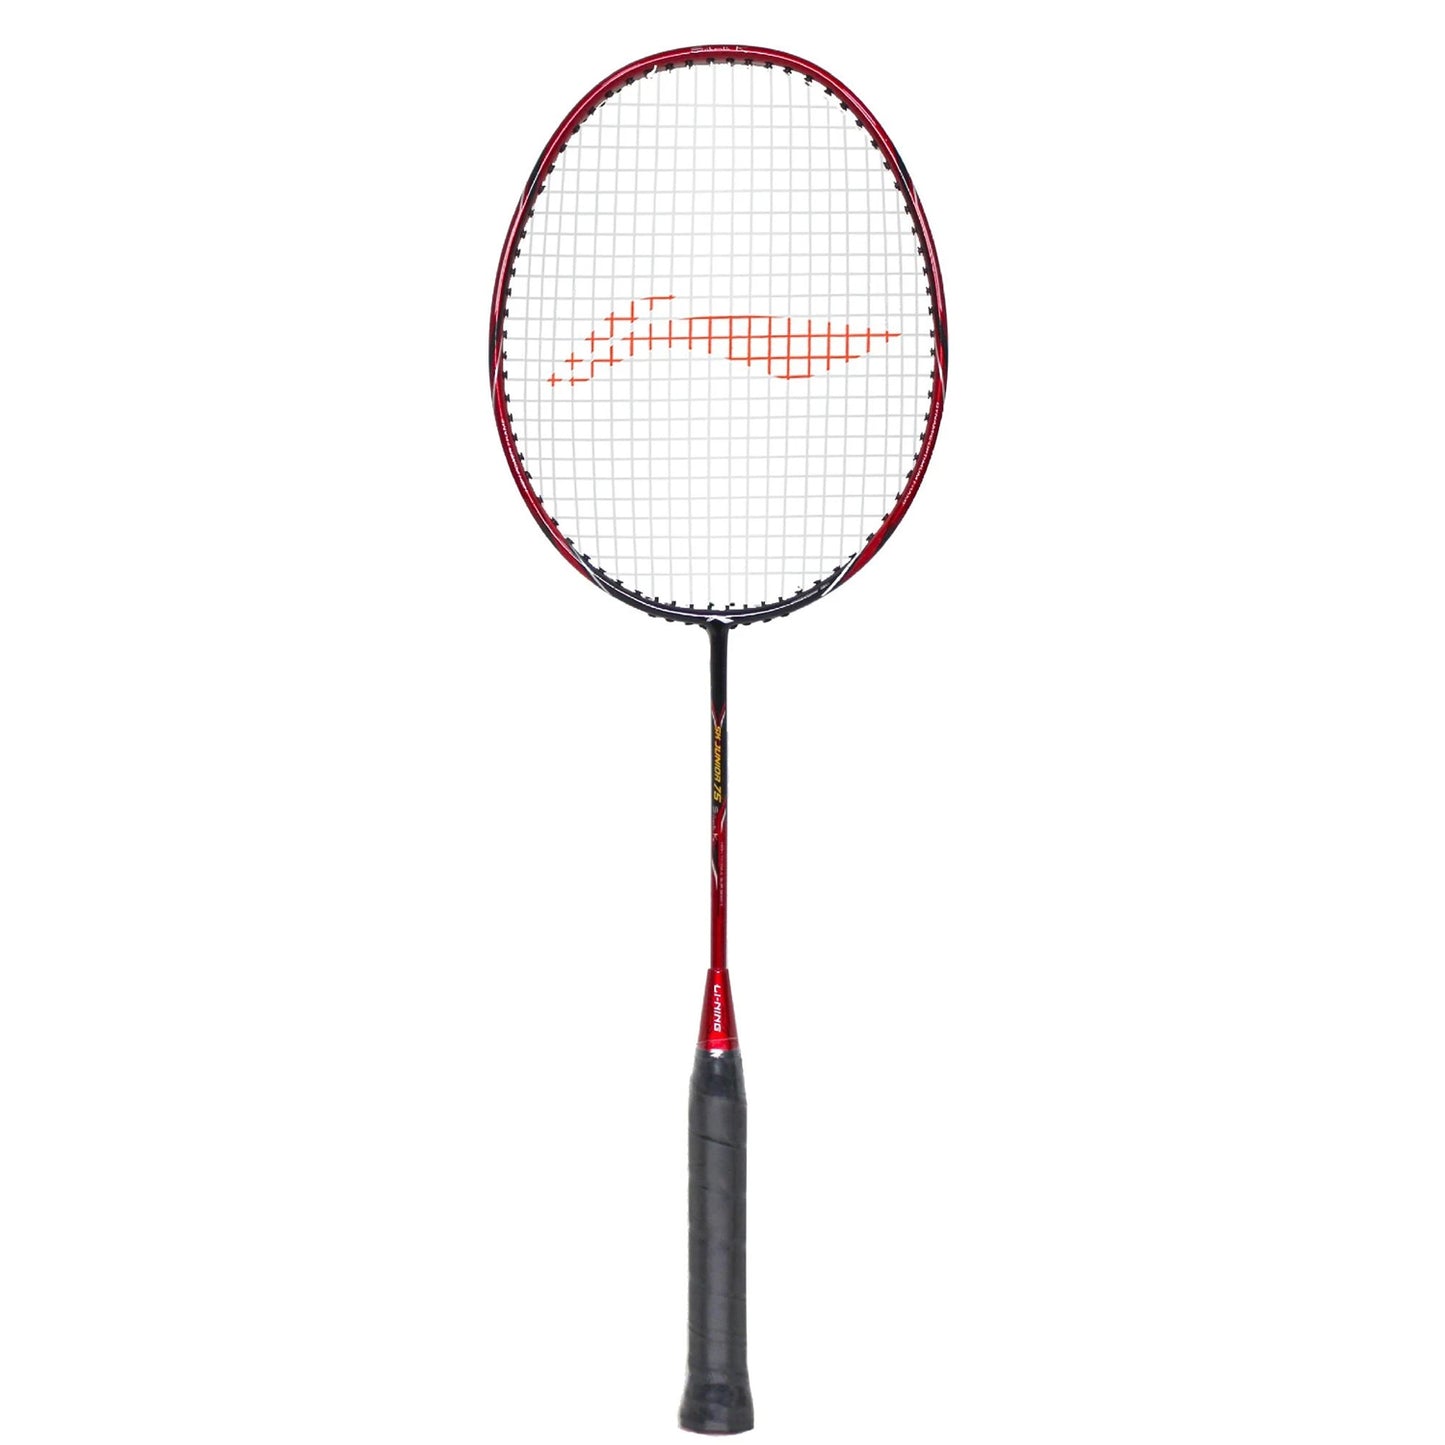 Li-Ning AYPP498-5 SK Junior 75 Strung Badminton Racquet with Fullcover - Red/Black - Best Price online Prokicksports.com